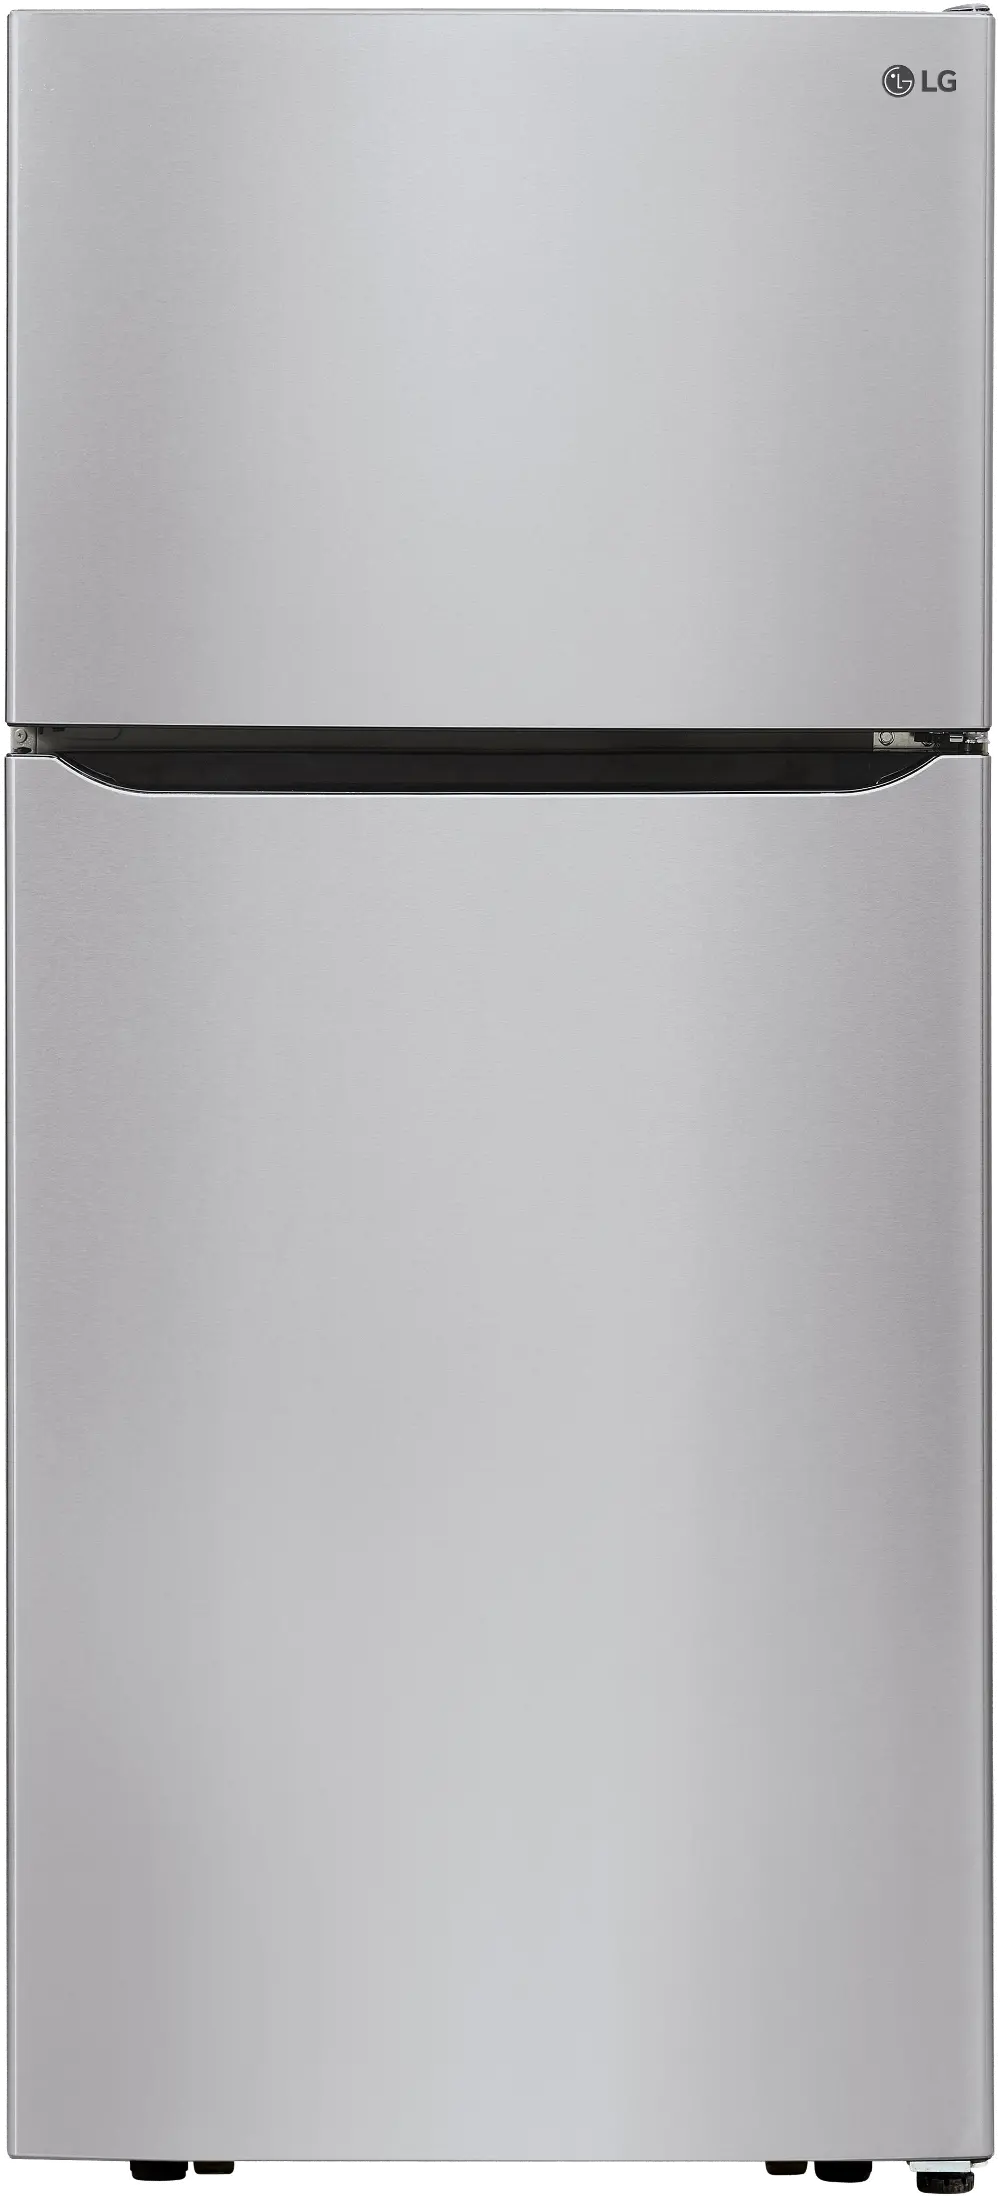 LTCS20020S LG 20.2 cu ft Top Freezer Refrigerator - 30 W Stainless Steel-1